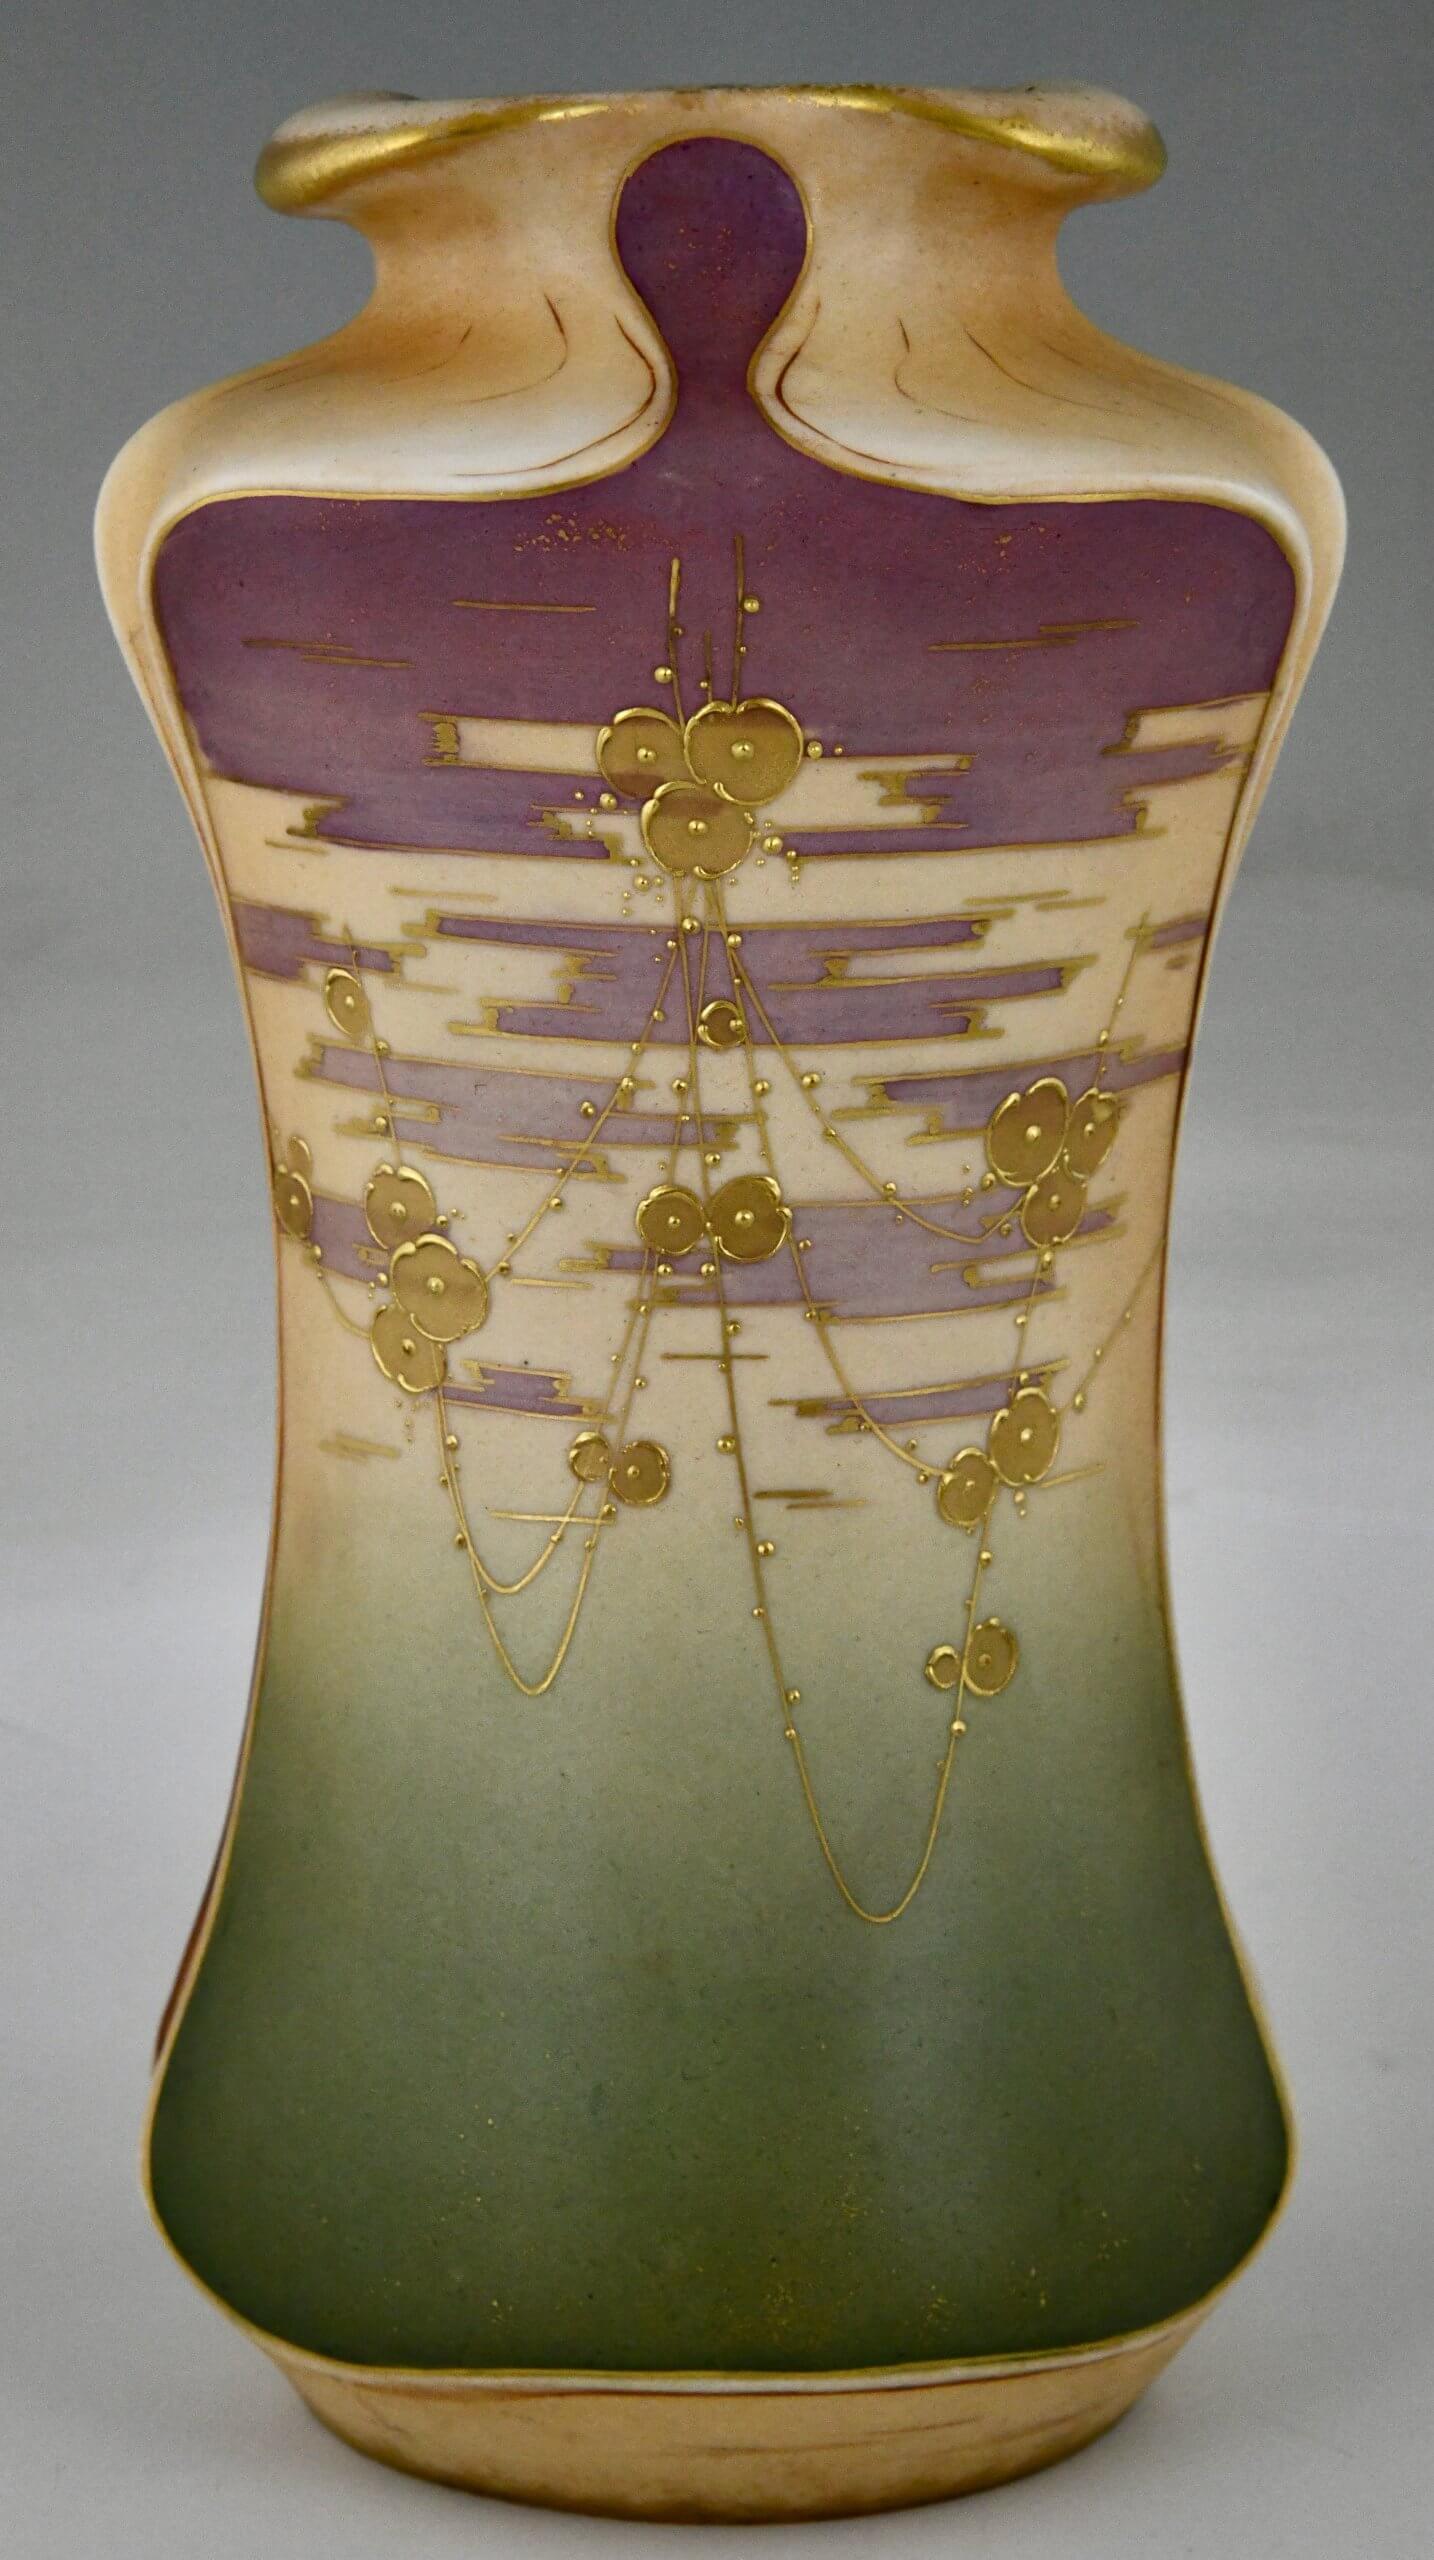 Jugendstil Keramikvasen mit vergoldeten Blumen